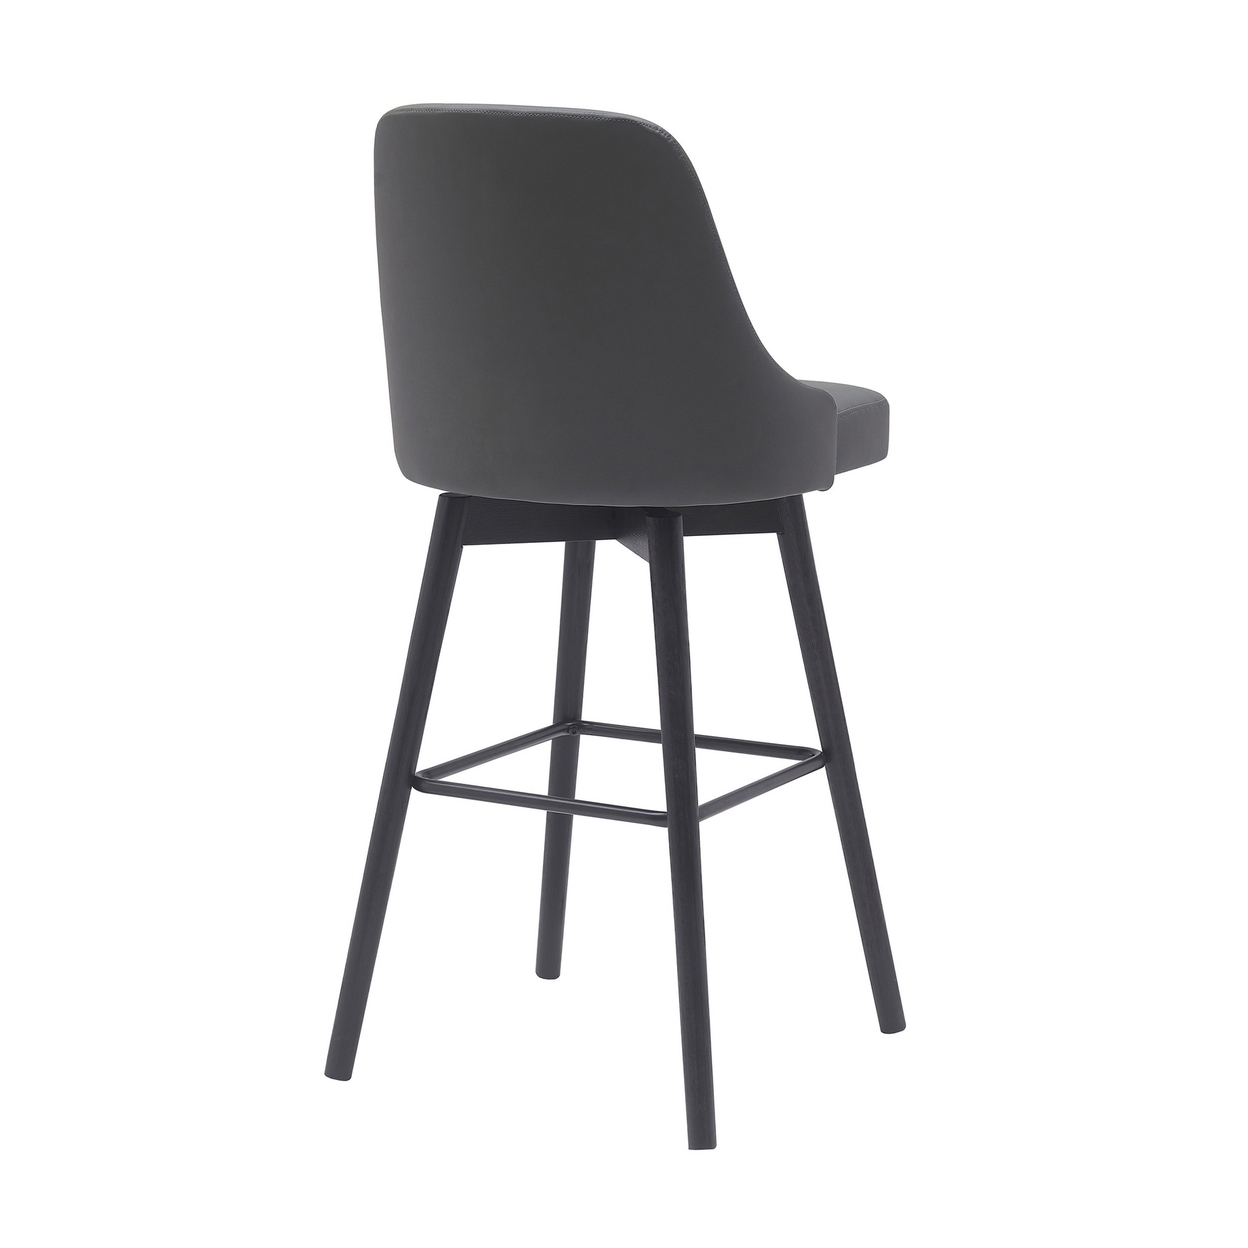 Sean 30 Inch Barstool Chair, Parson Style, Swivel, Gray Faux Leather, Black - Saltoro Sherpi